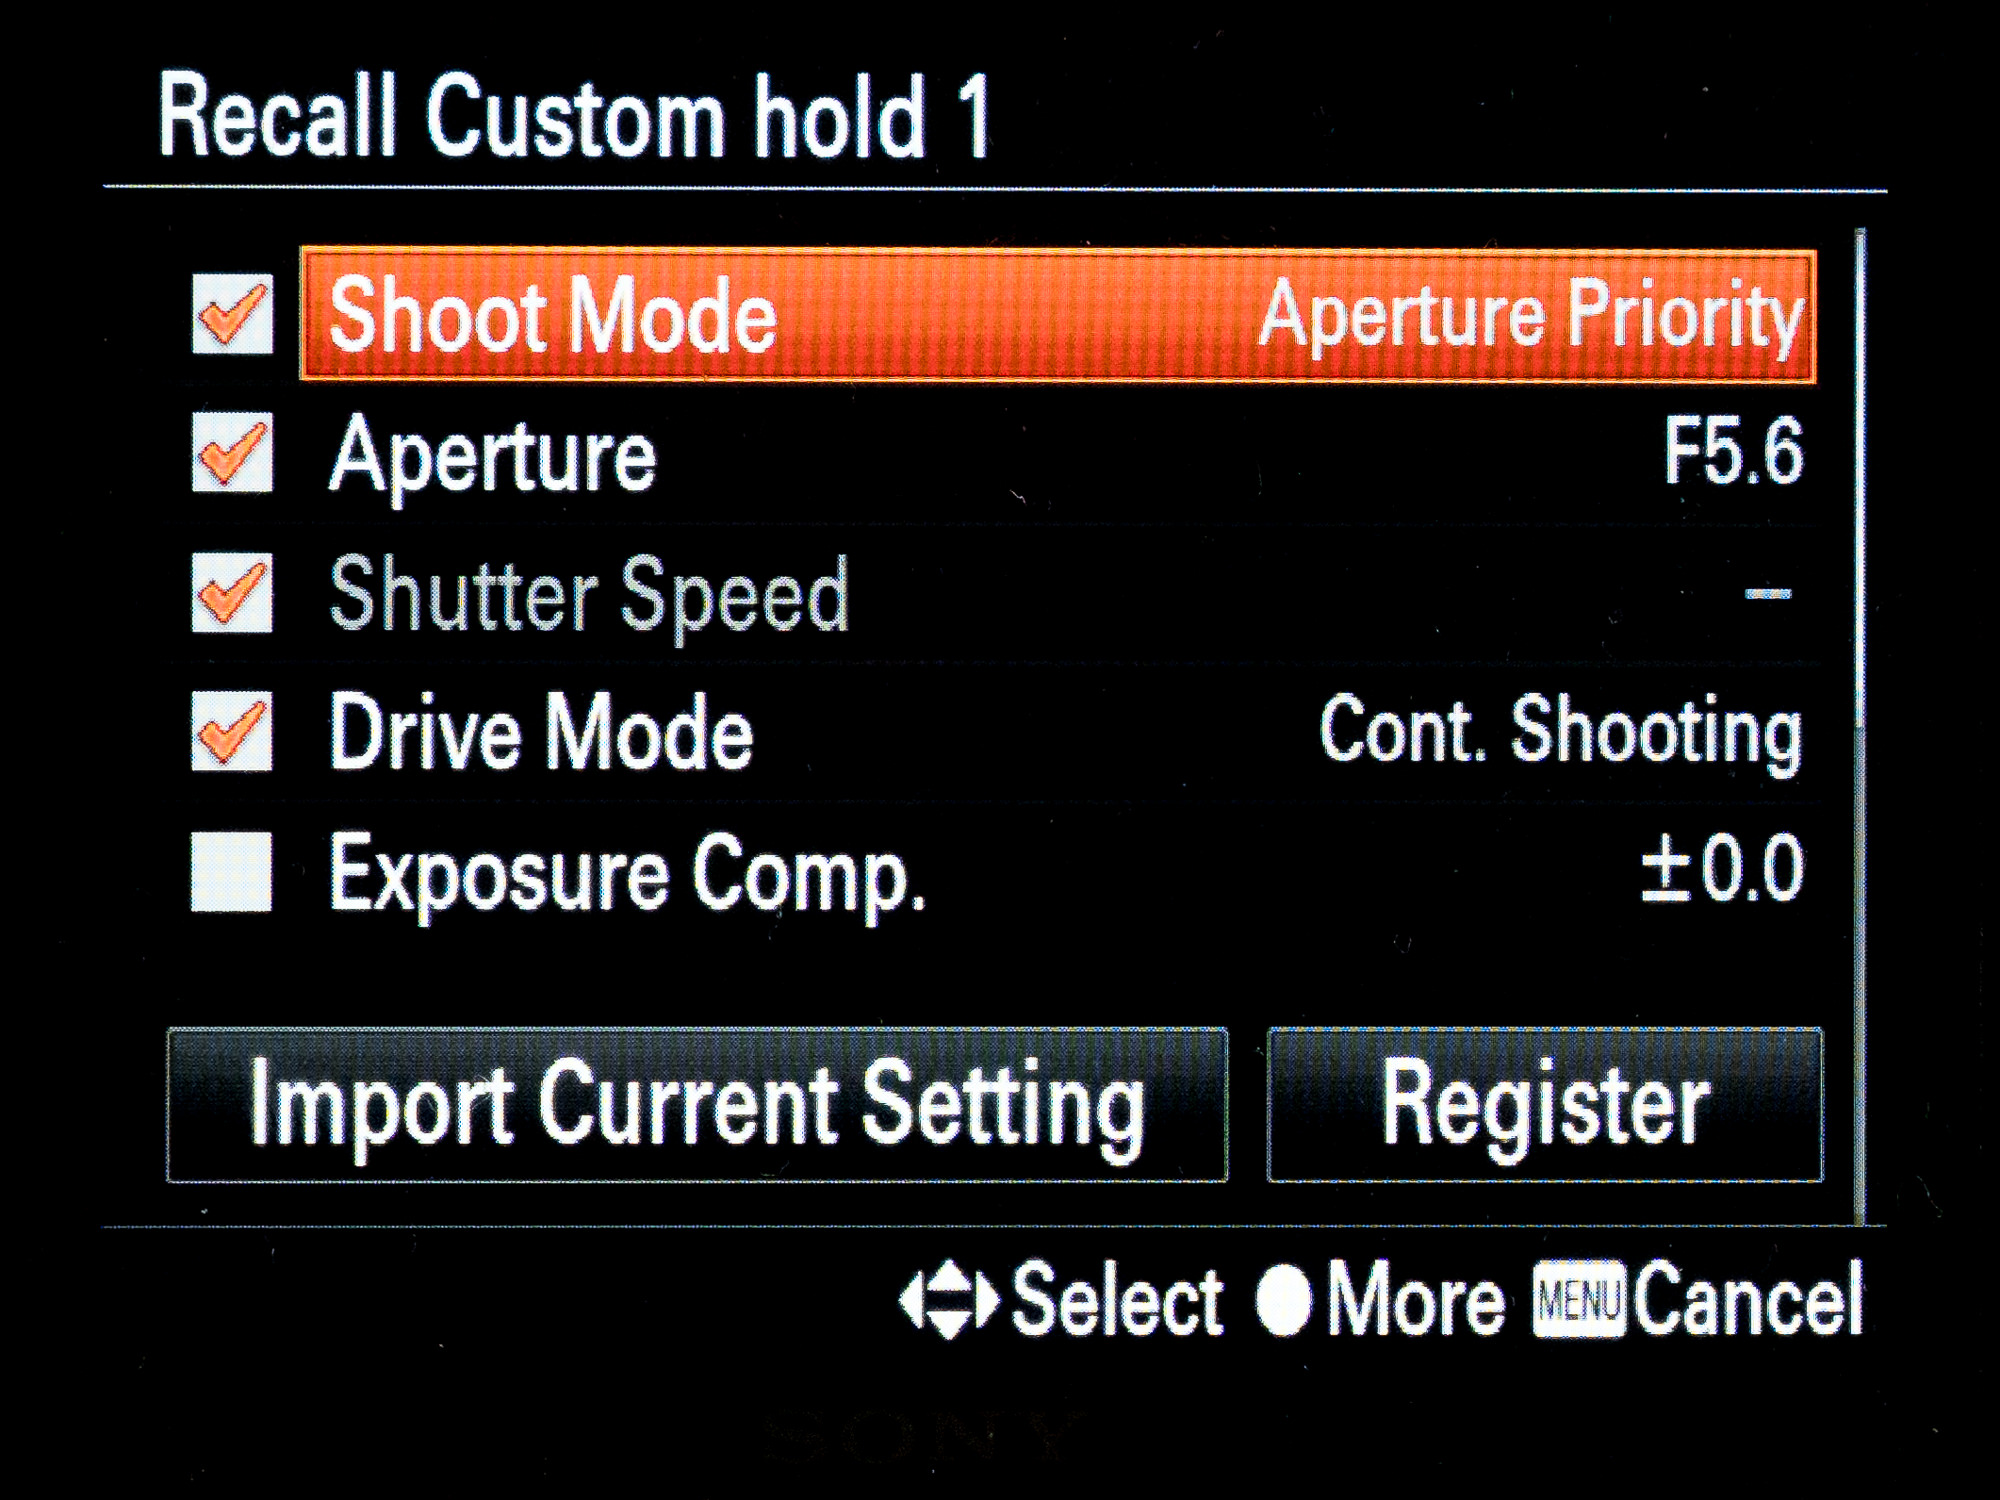 Sony A7Riii recall custom hold 2